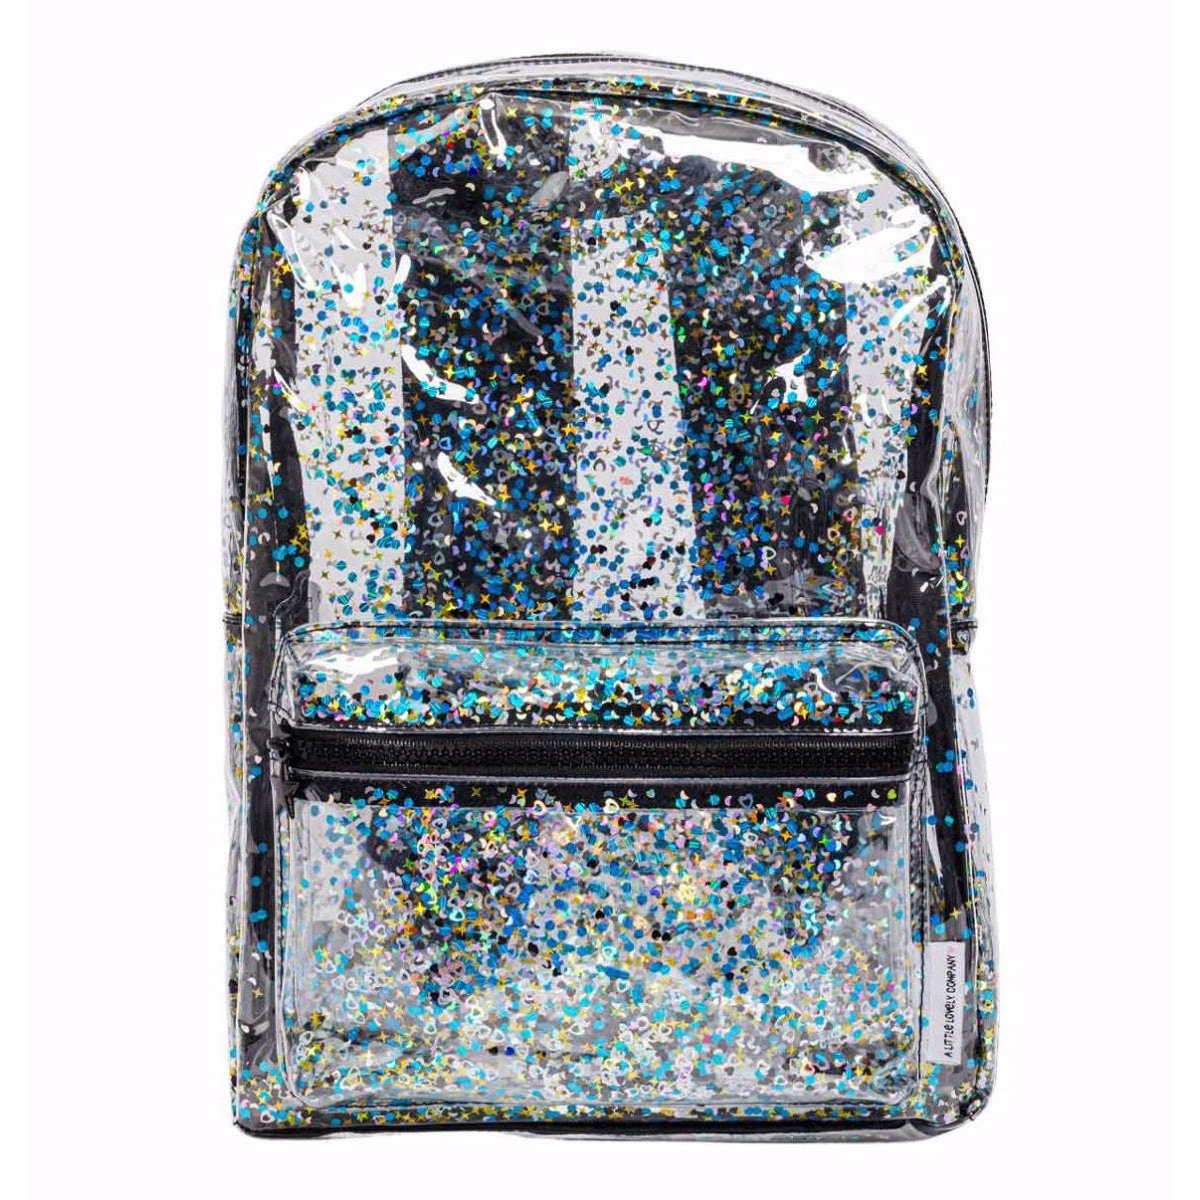 a-little-lovely-company-backpack-glitter-transparent-black- (1)